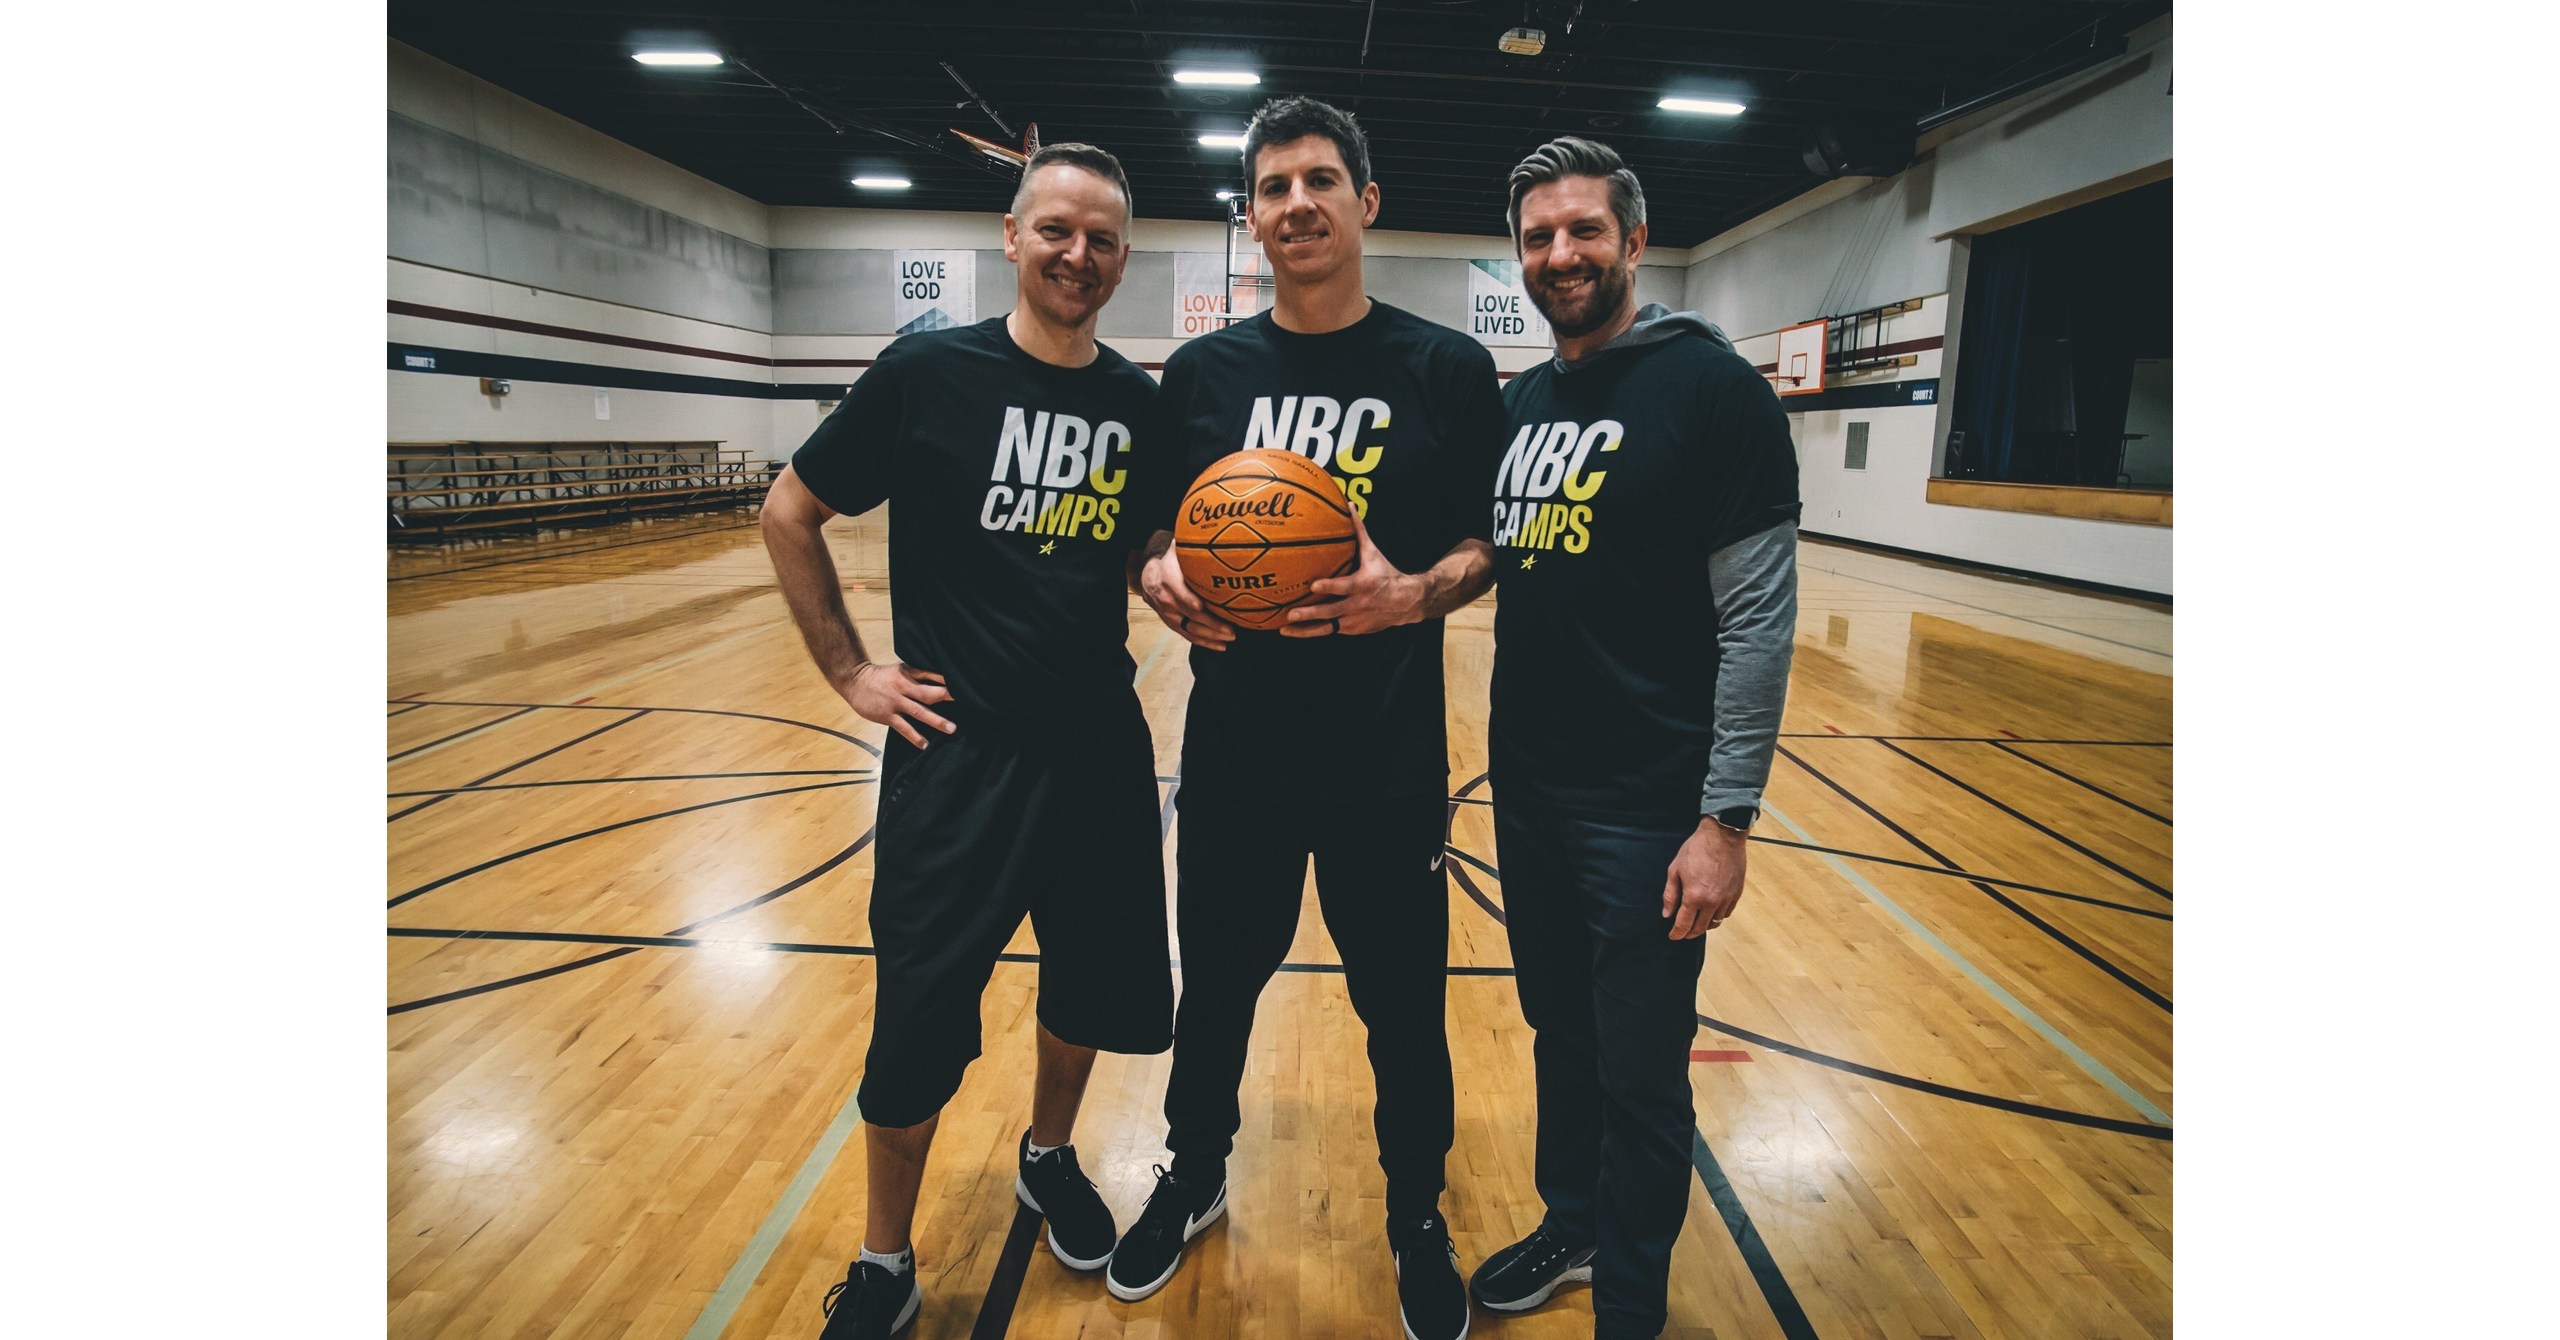 NBC Basketball Camps (@nbccamps) / X